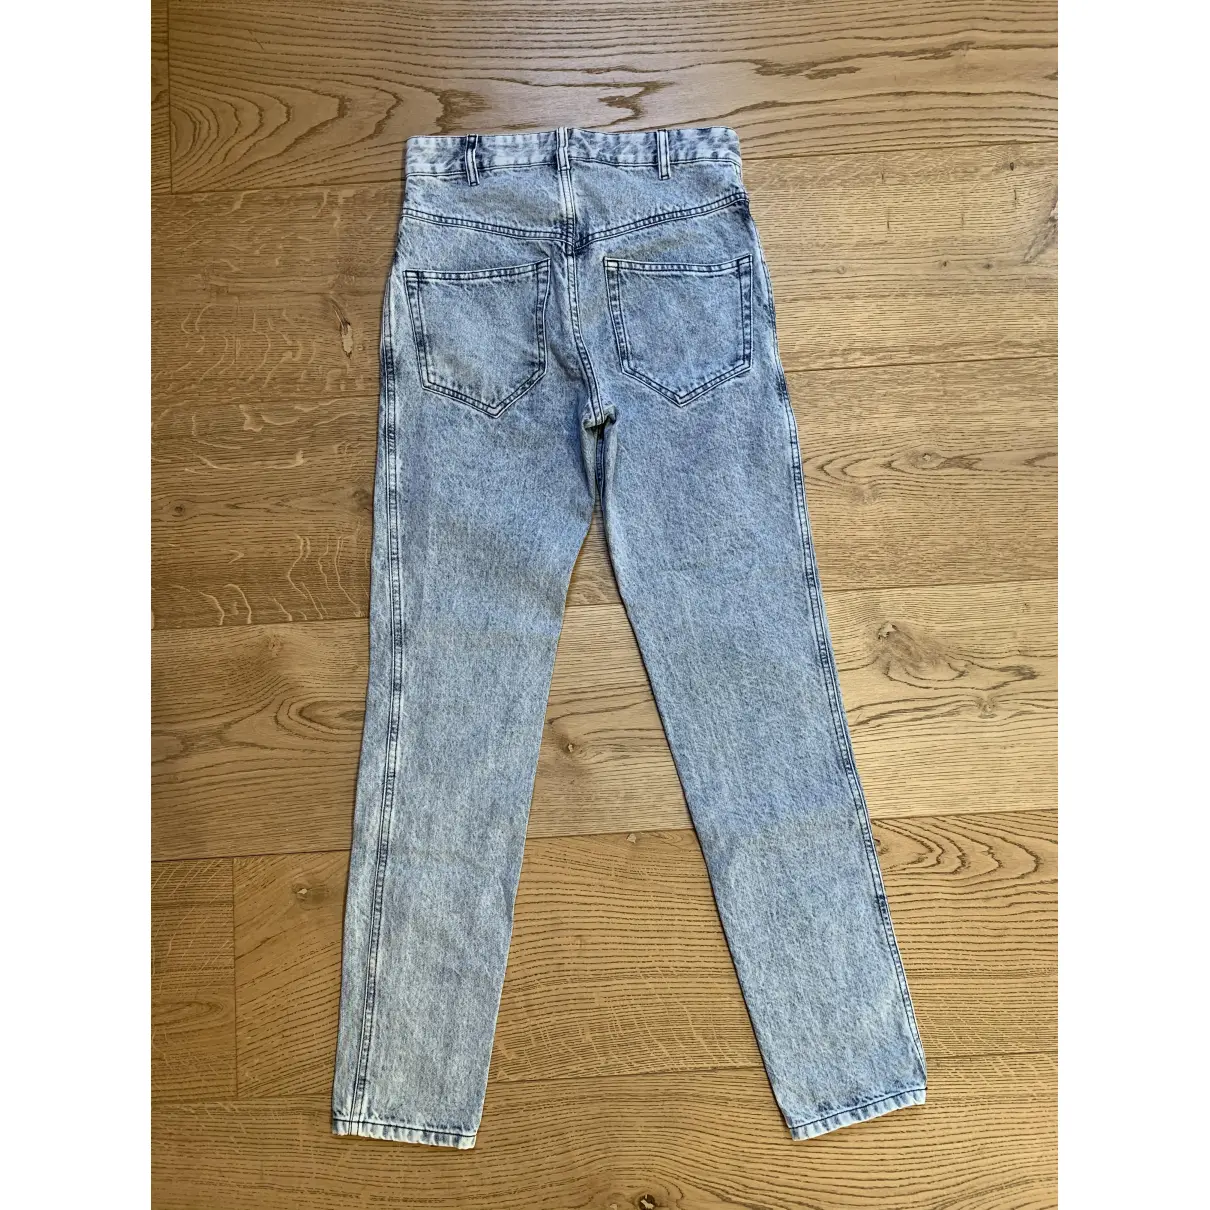 Buy Isabel Marant Denim - Jeans Jeans online